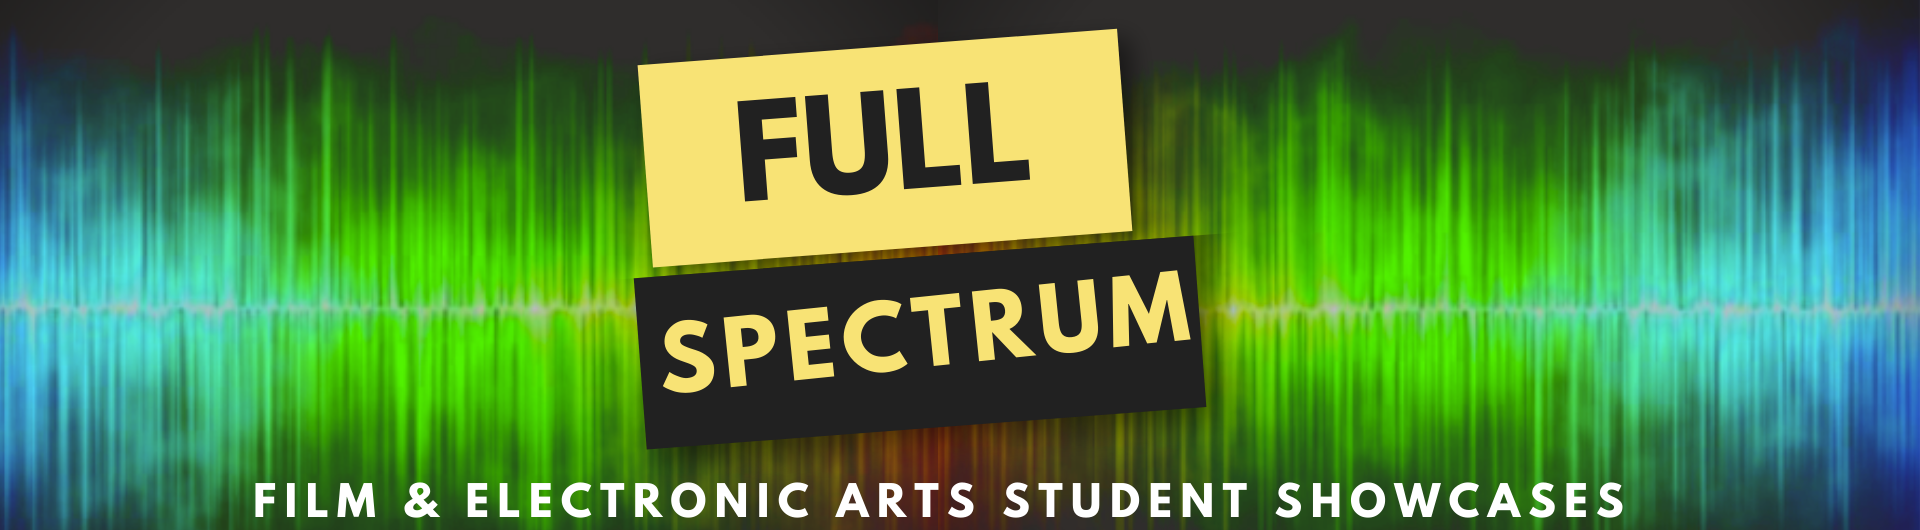 Full Spectrum Film & Electronic Arts Student Showcases